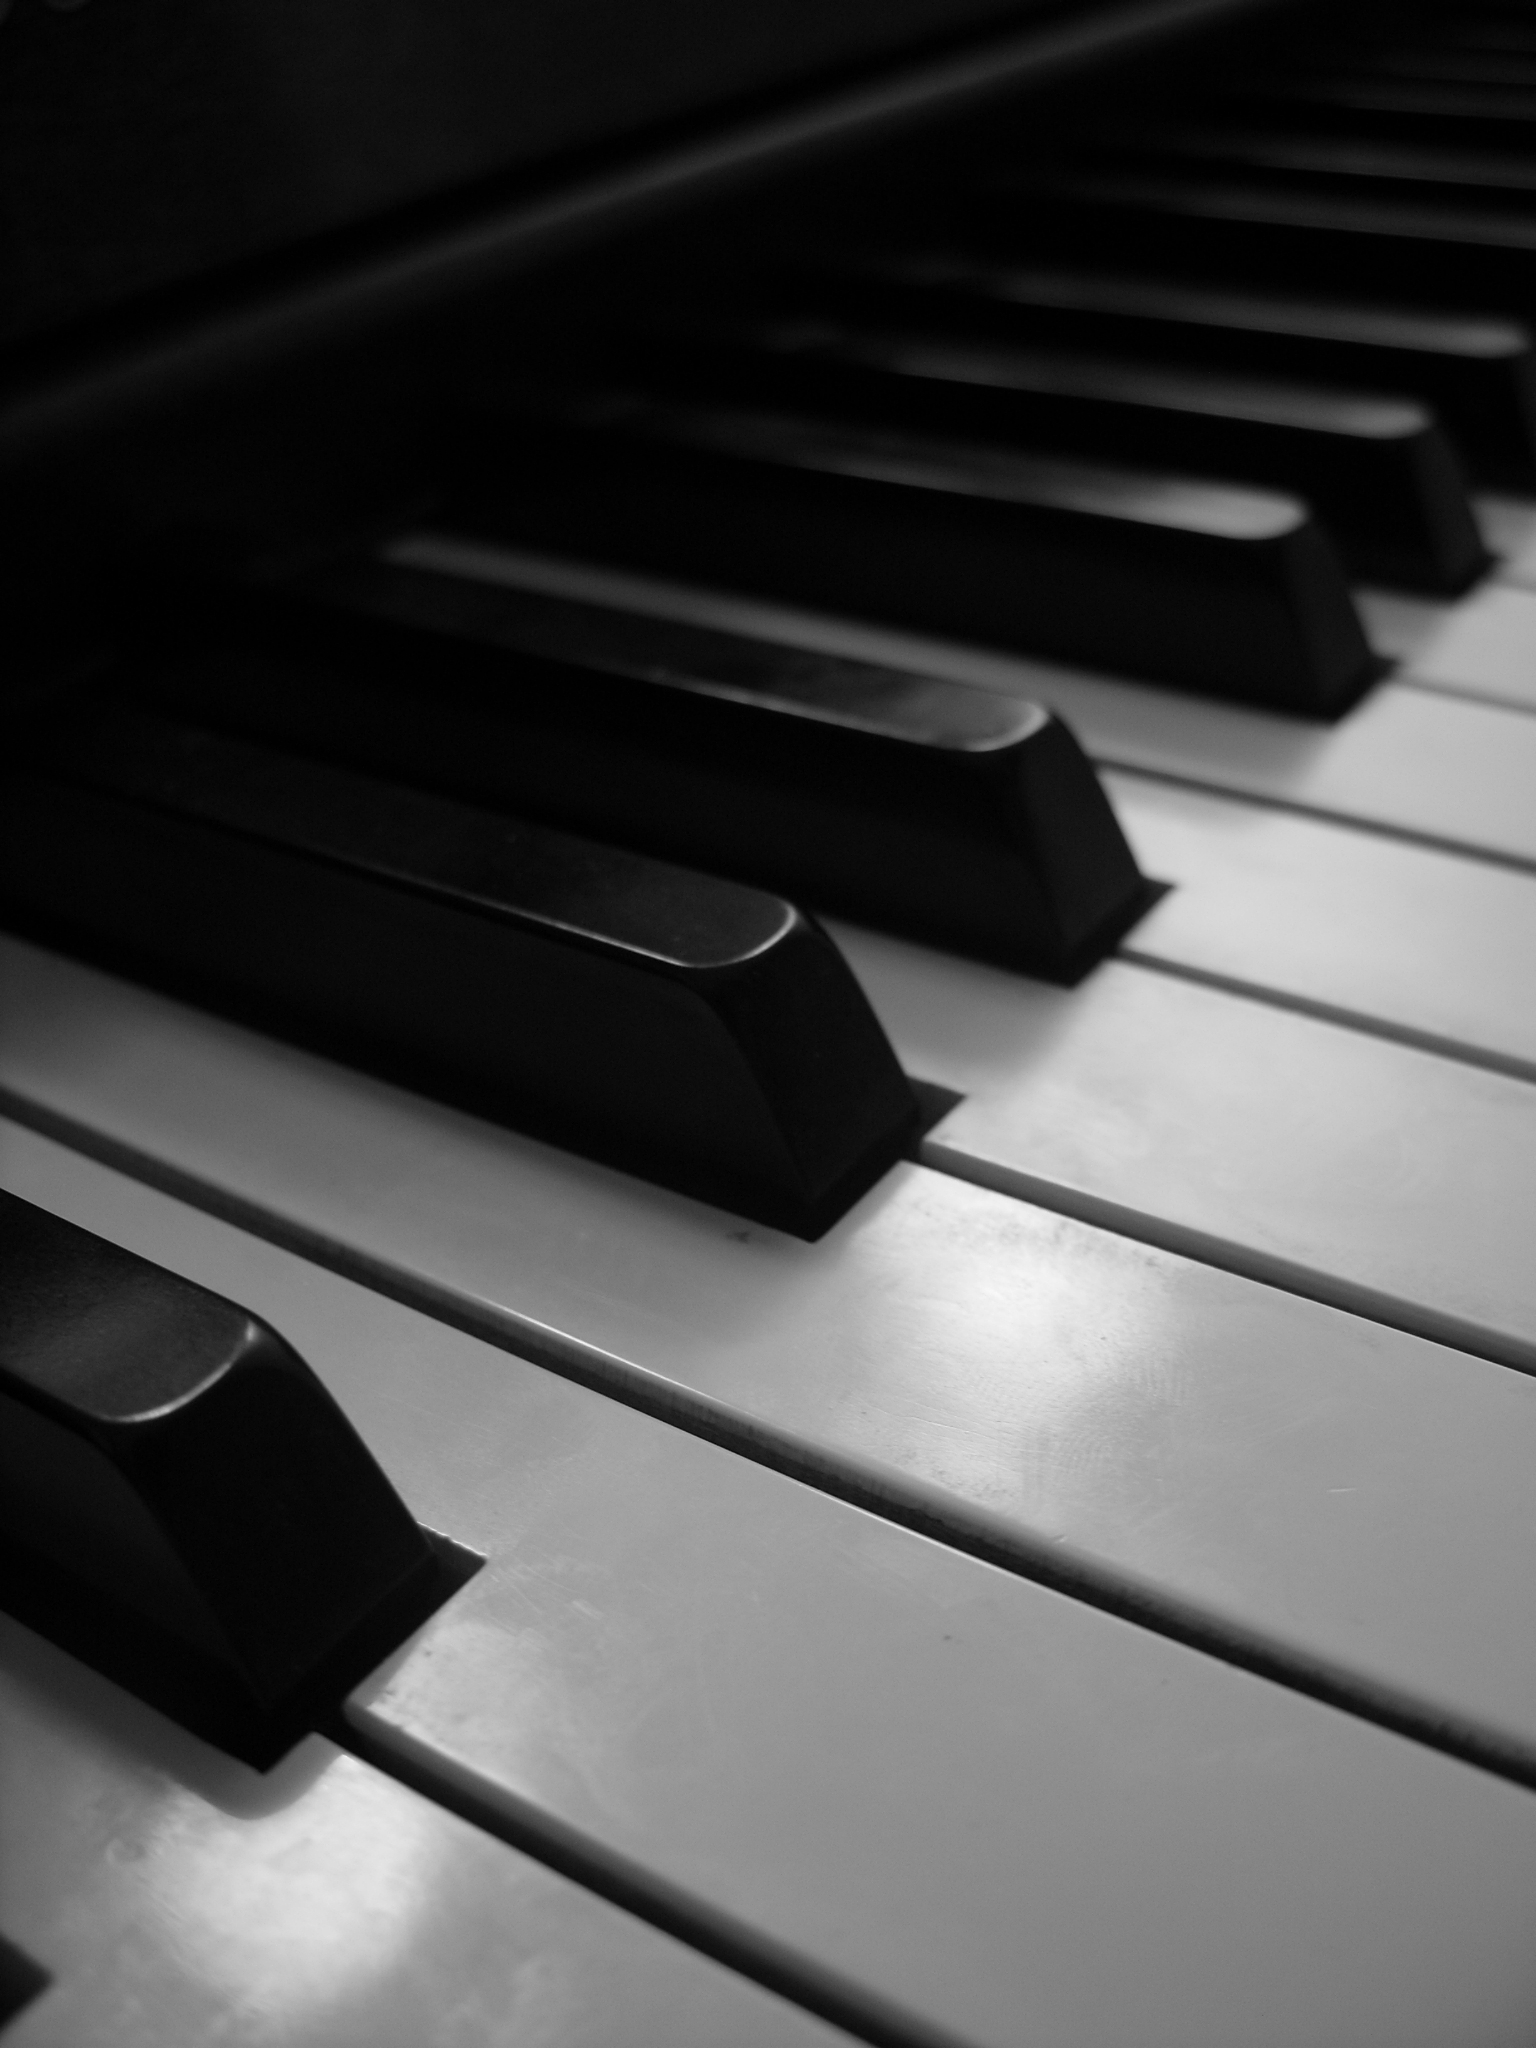 piano, macro, music, chb, keys, bw, musical instrument